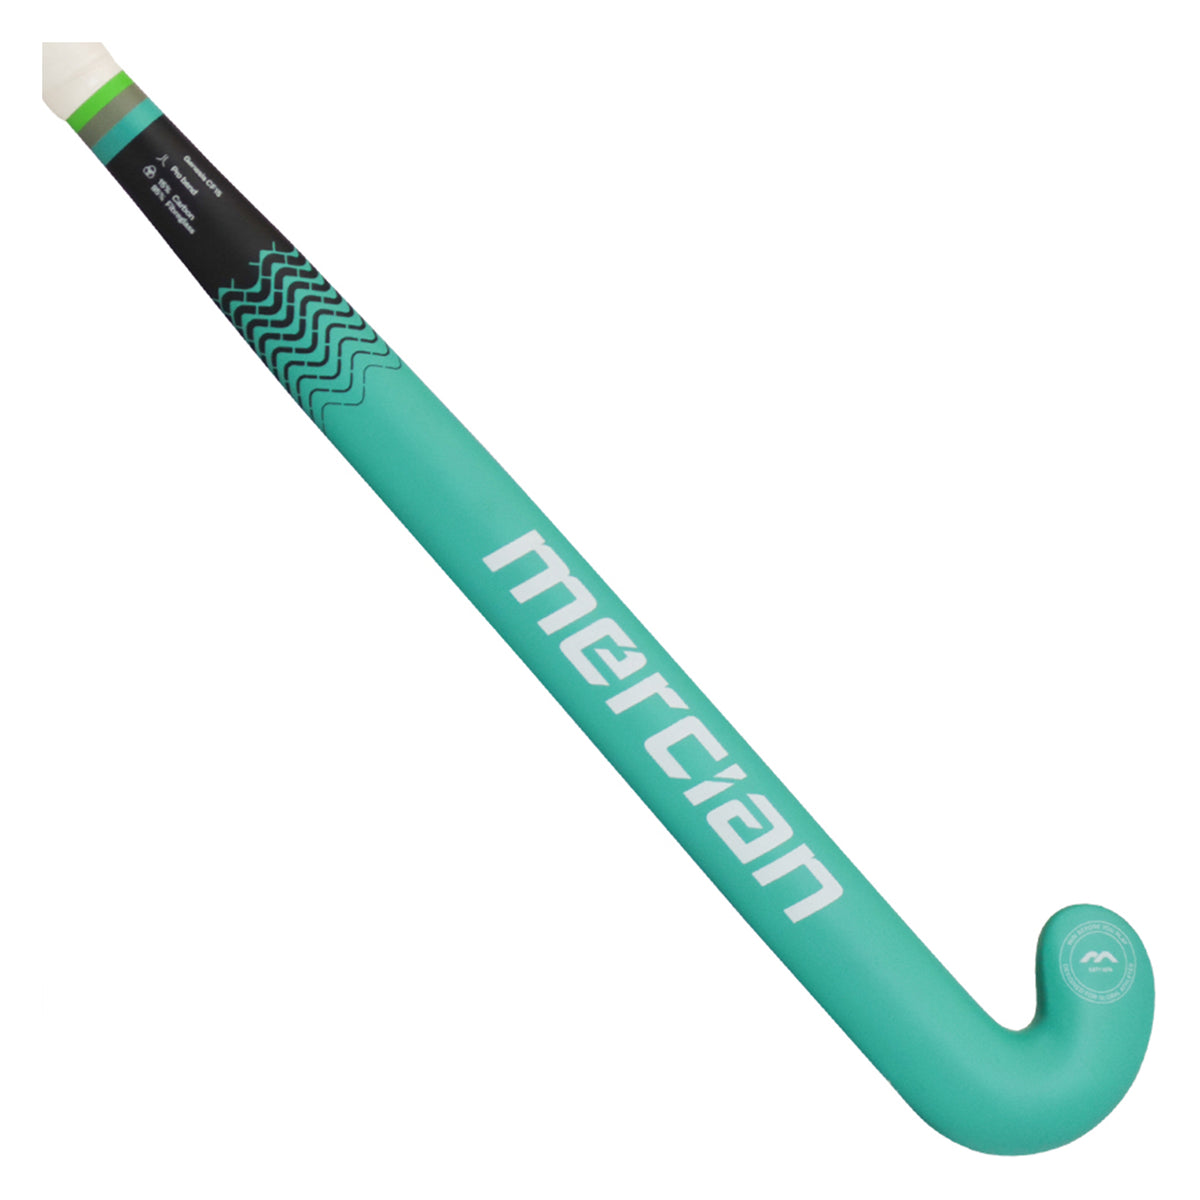 Mercian Genesis CF15 Pro Hockey Stick: Black/Green